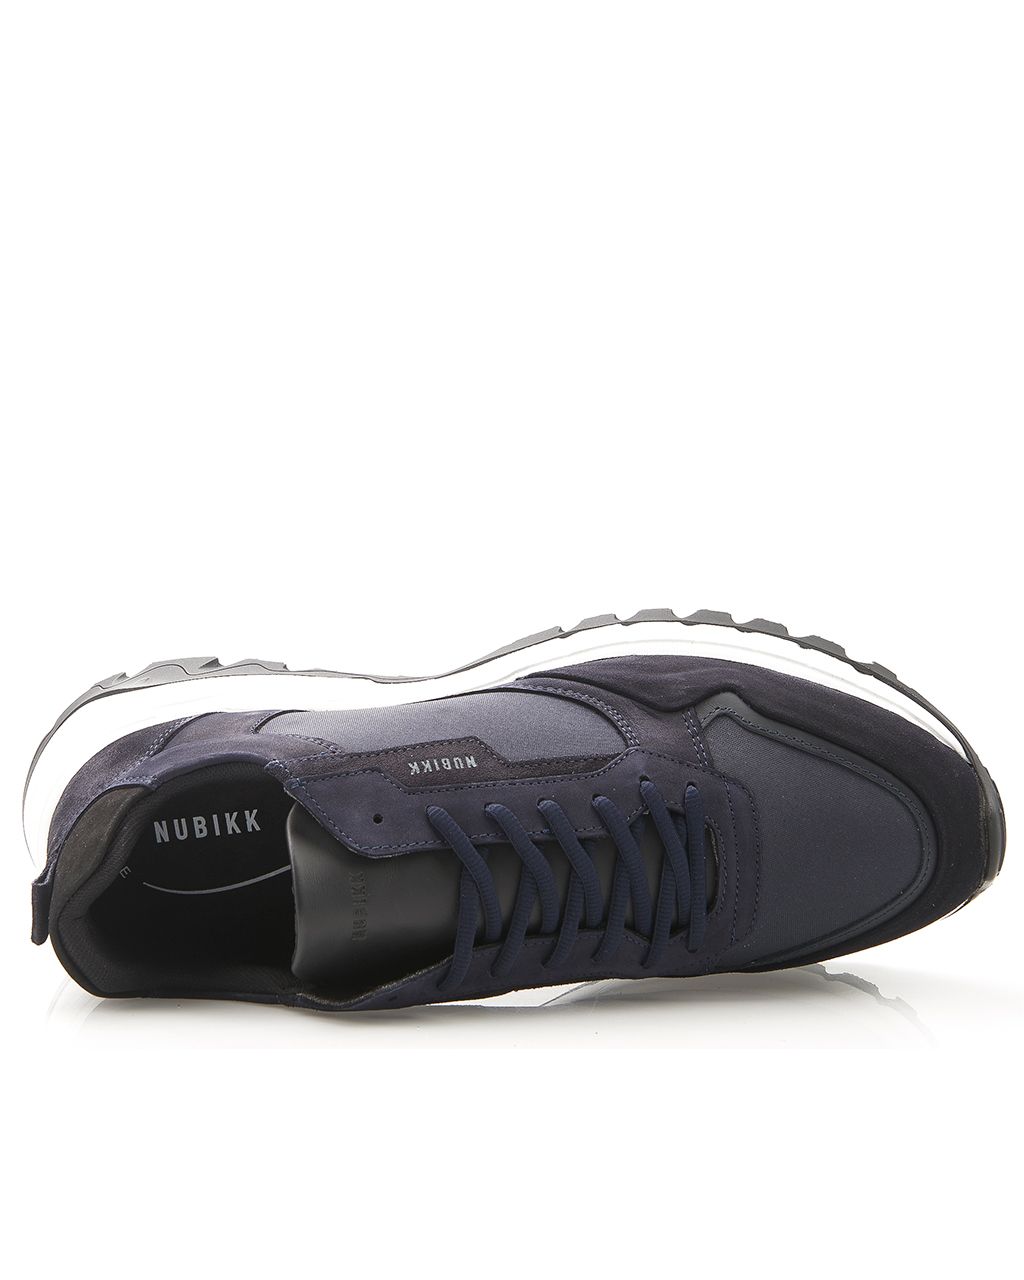 Nubikk Ellis Rover Sneakers Donker blauw 077084-001-40